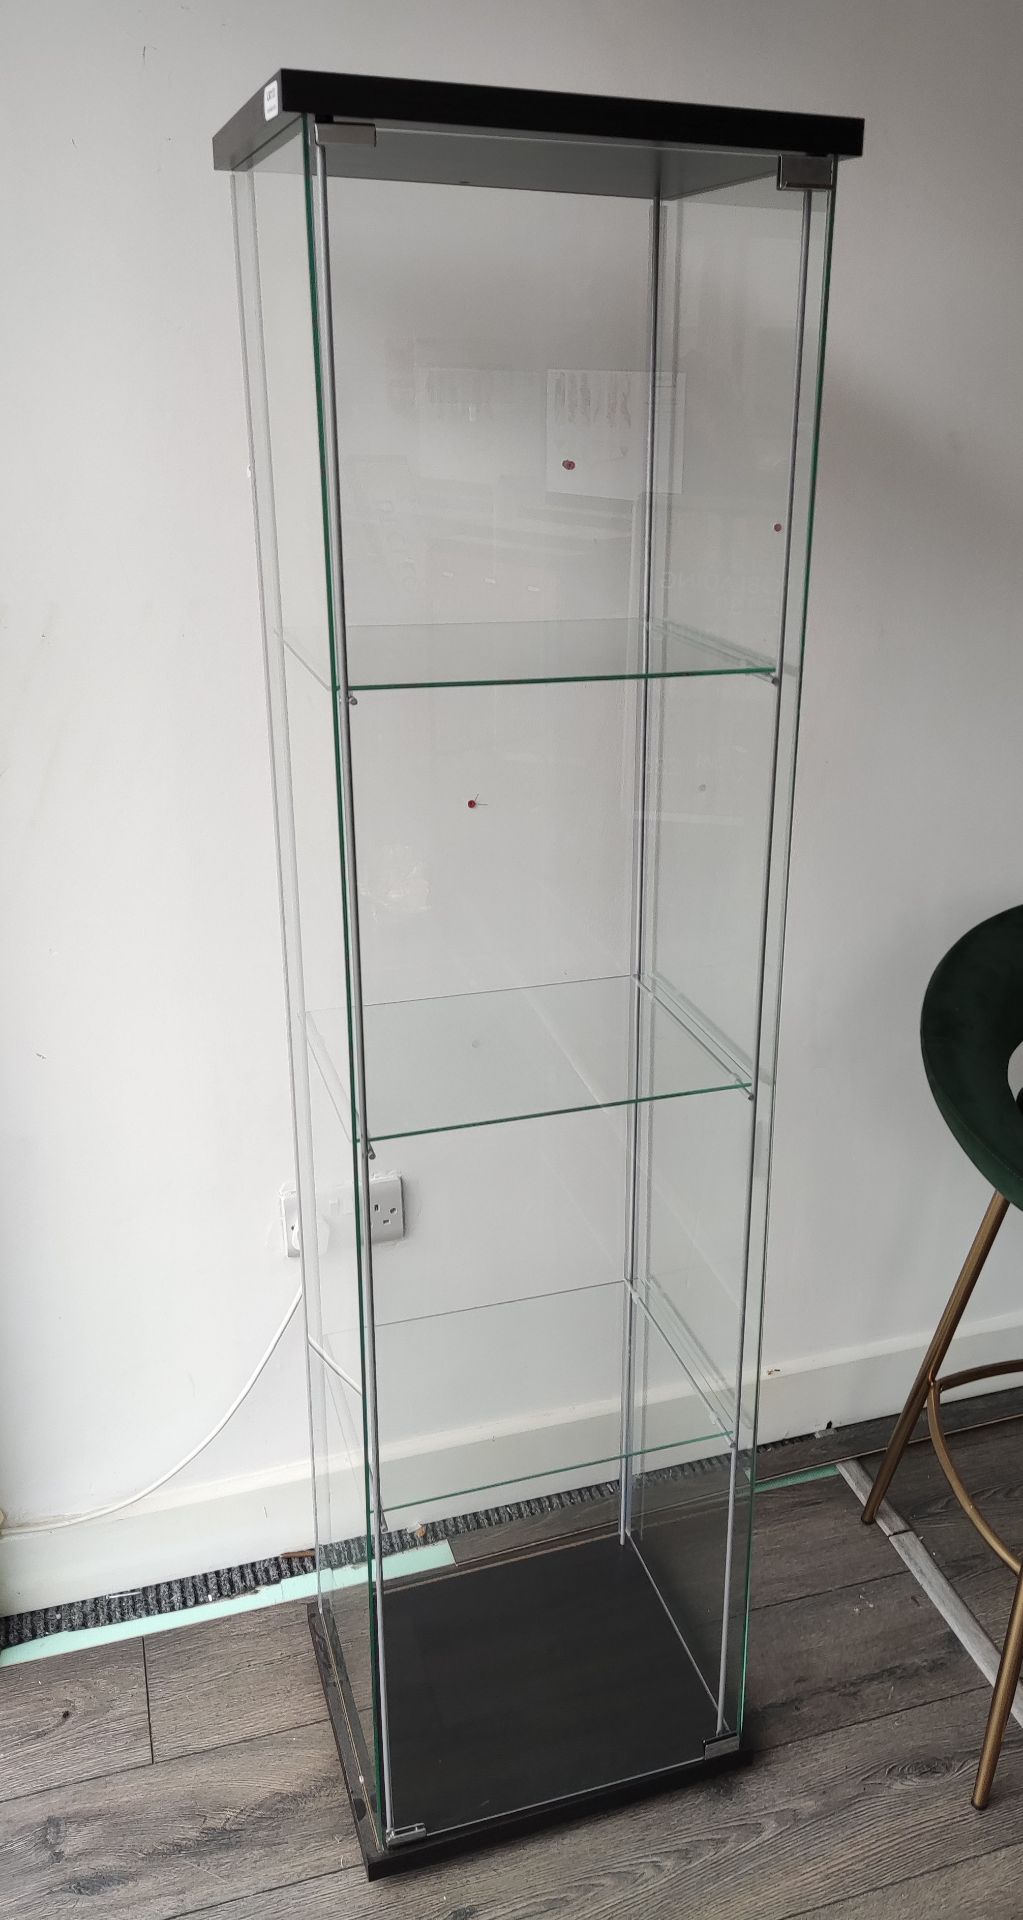 1 x Tall Glass Display Cabinet - LBC133 - CL763- Location: Sale M33Dimensions: 164 x 42.5 x - Image 2 of 2